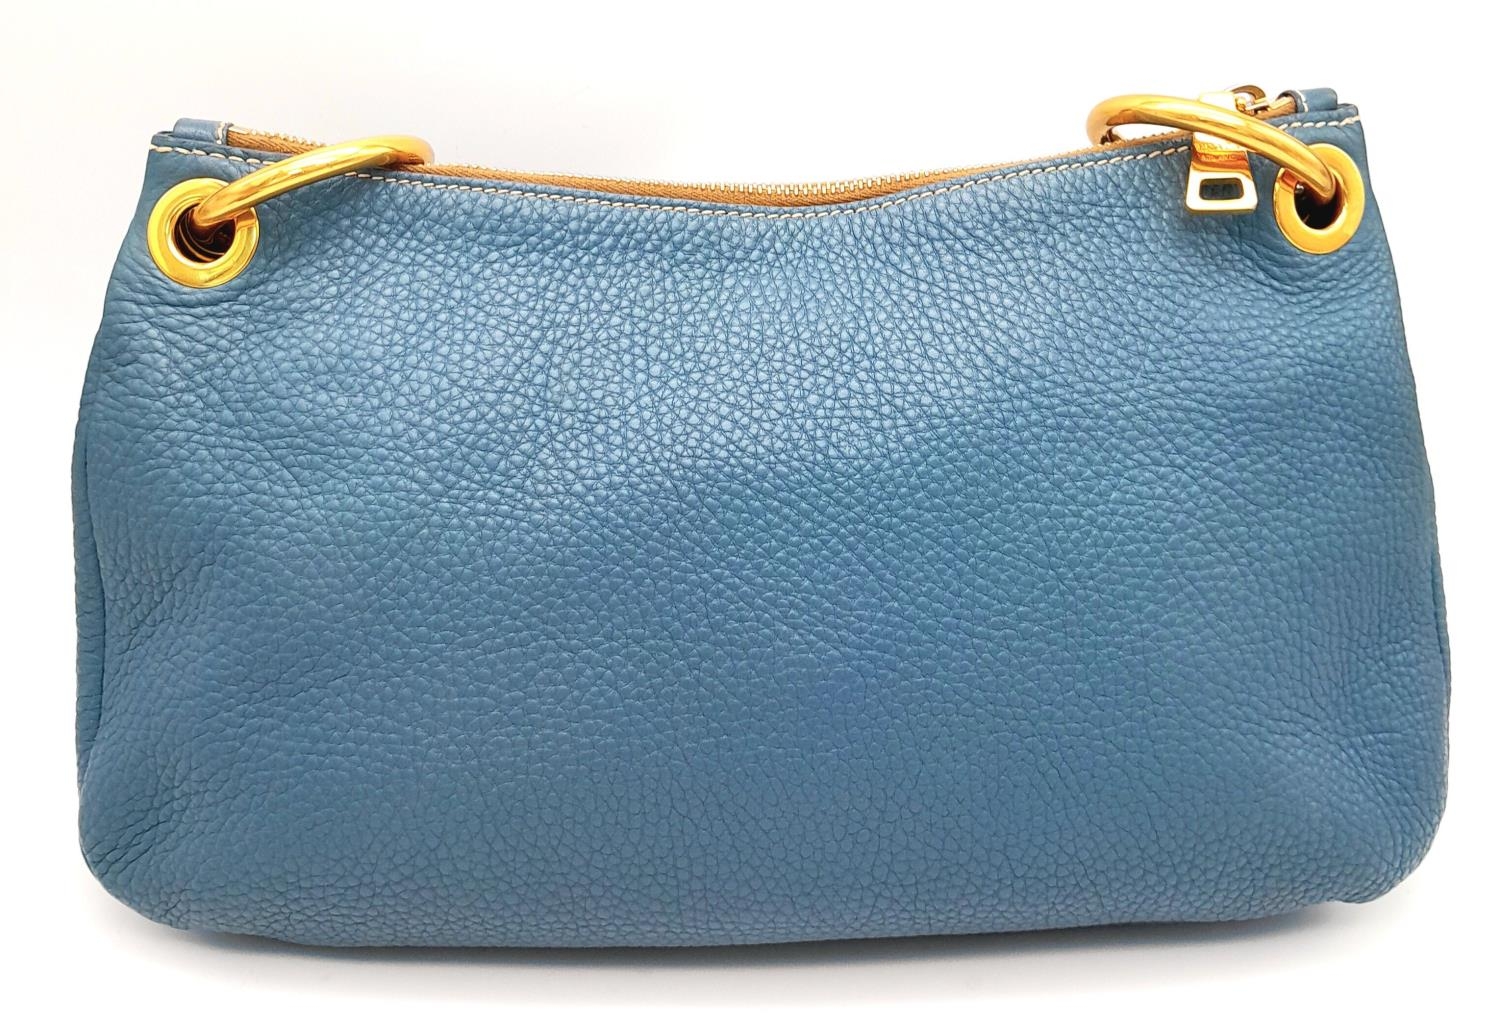 A Prada Marine Blue Vitello Daino Shoulder Bag. Leather exterior with gold-toned hardware, - Image 2 of 8